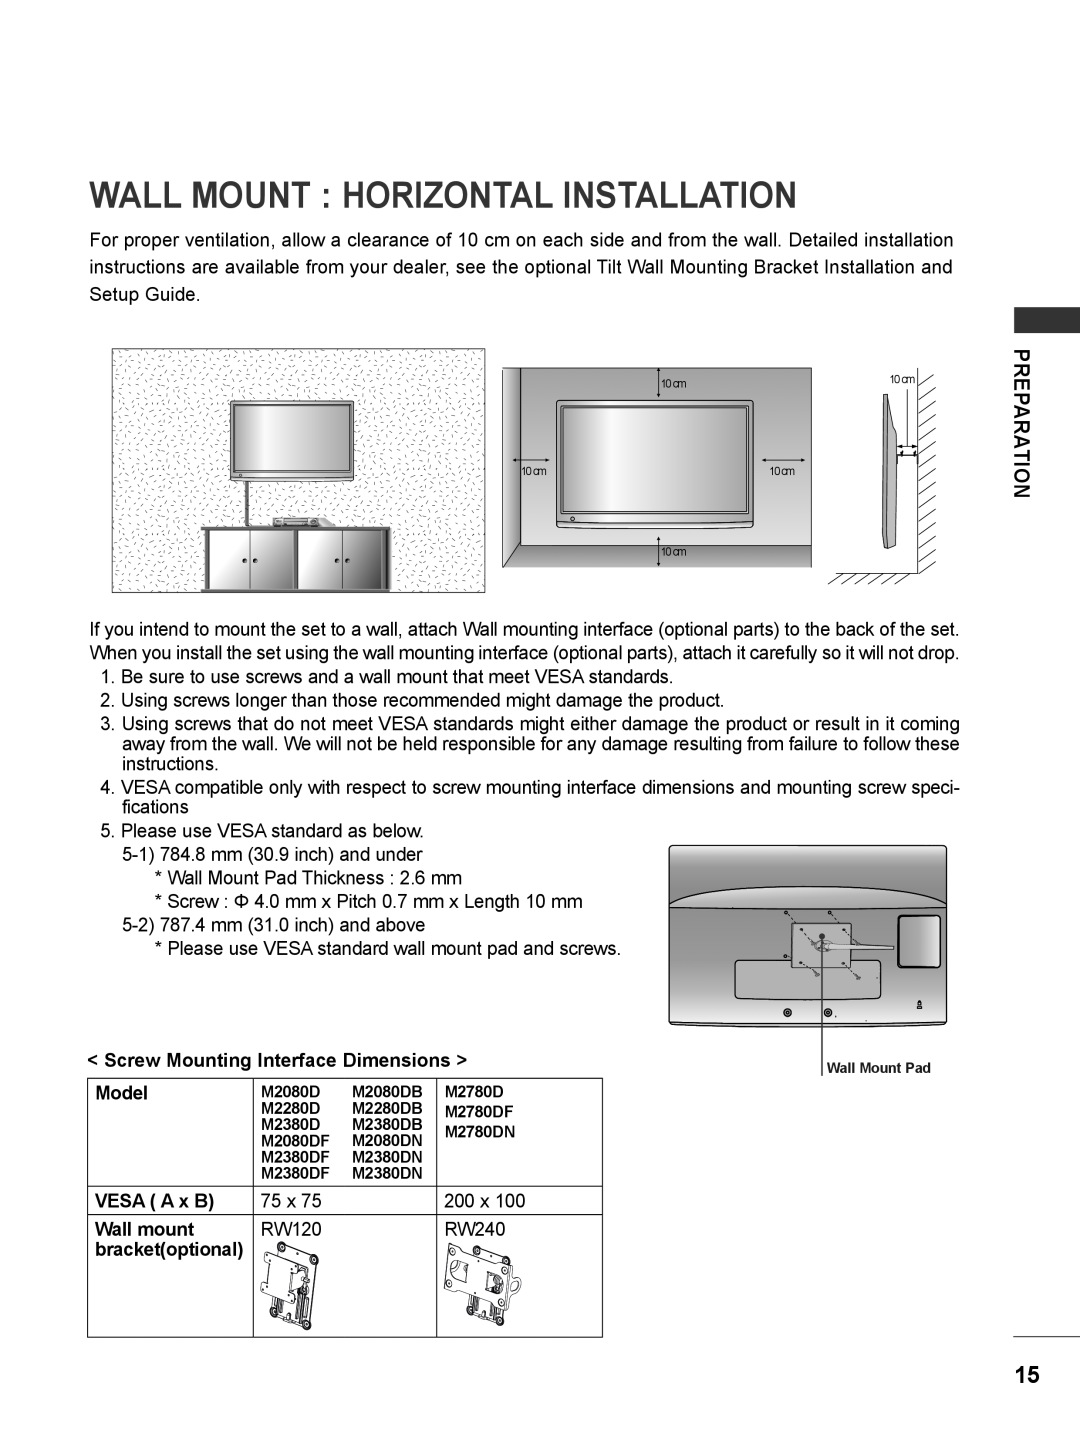 LG Electronics M2780DF Wall Mount Horizontal Installation, Screw Mounting Interface Dimensions, Model, VESA A x B, 75 x 